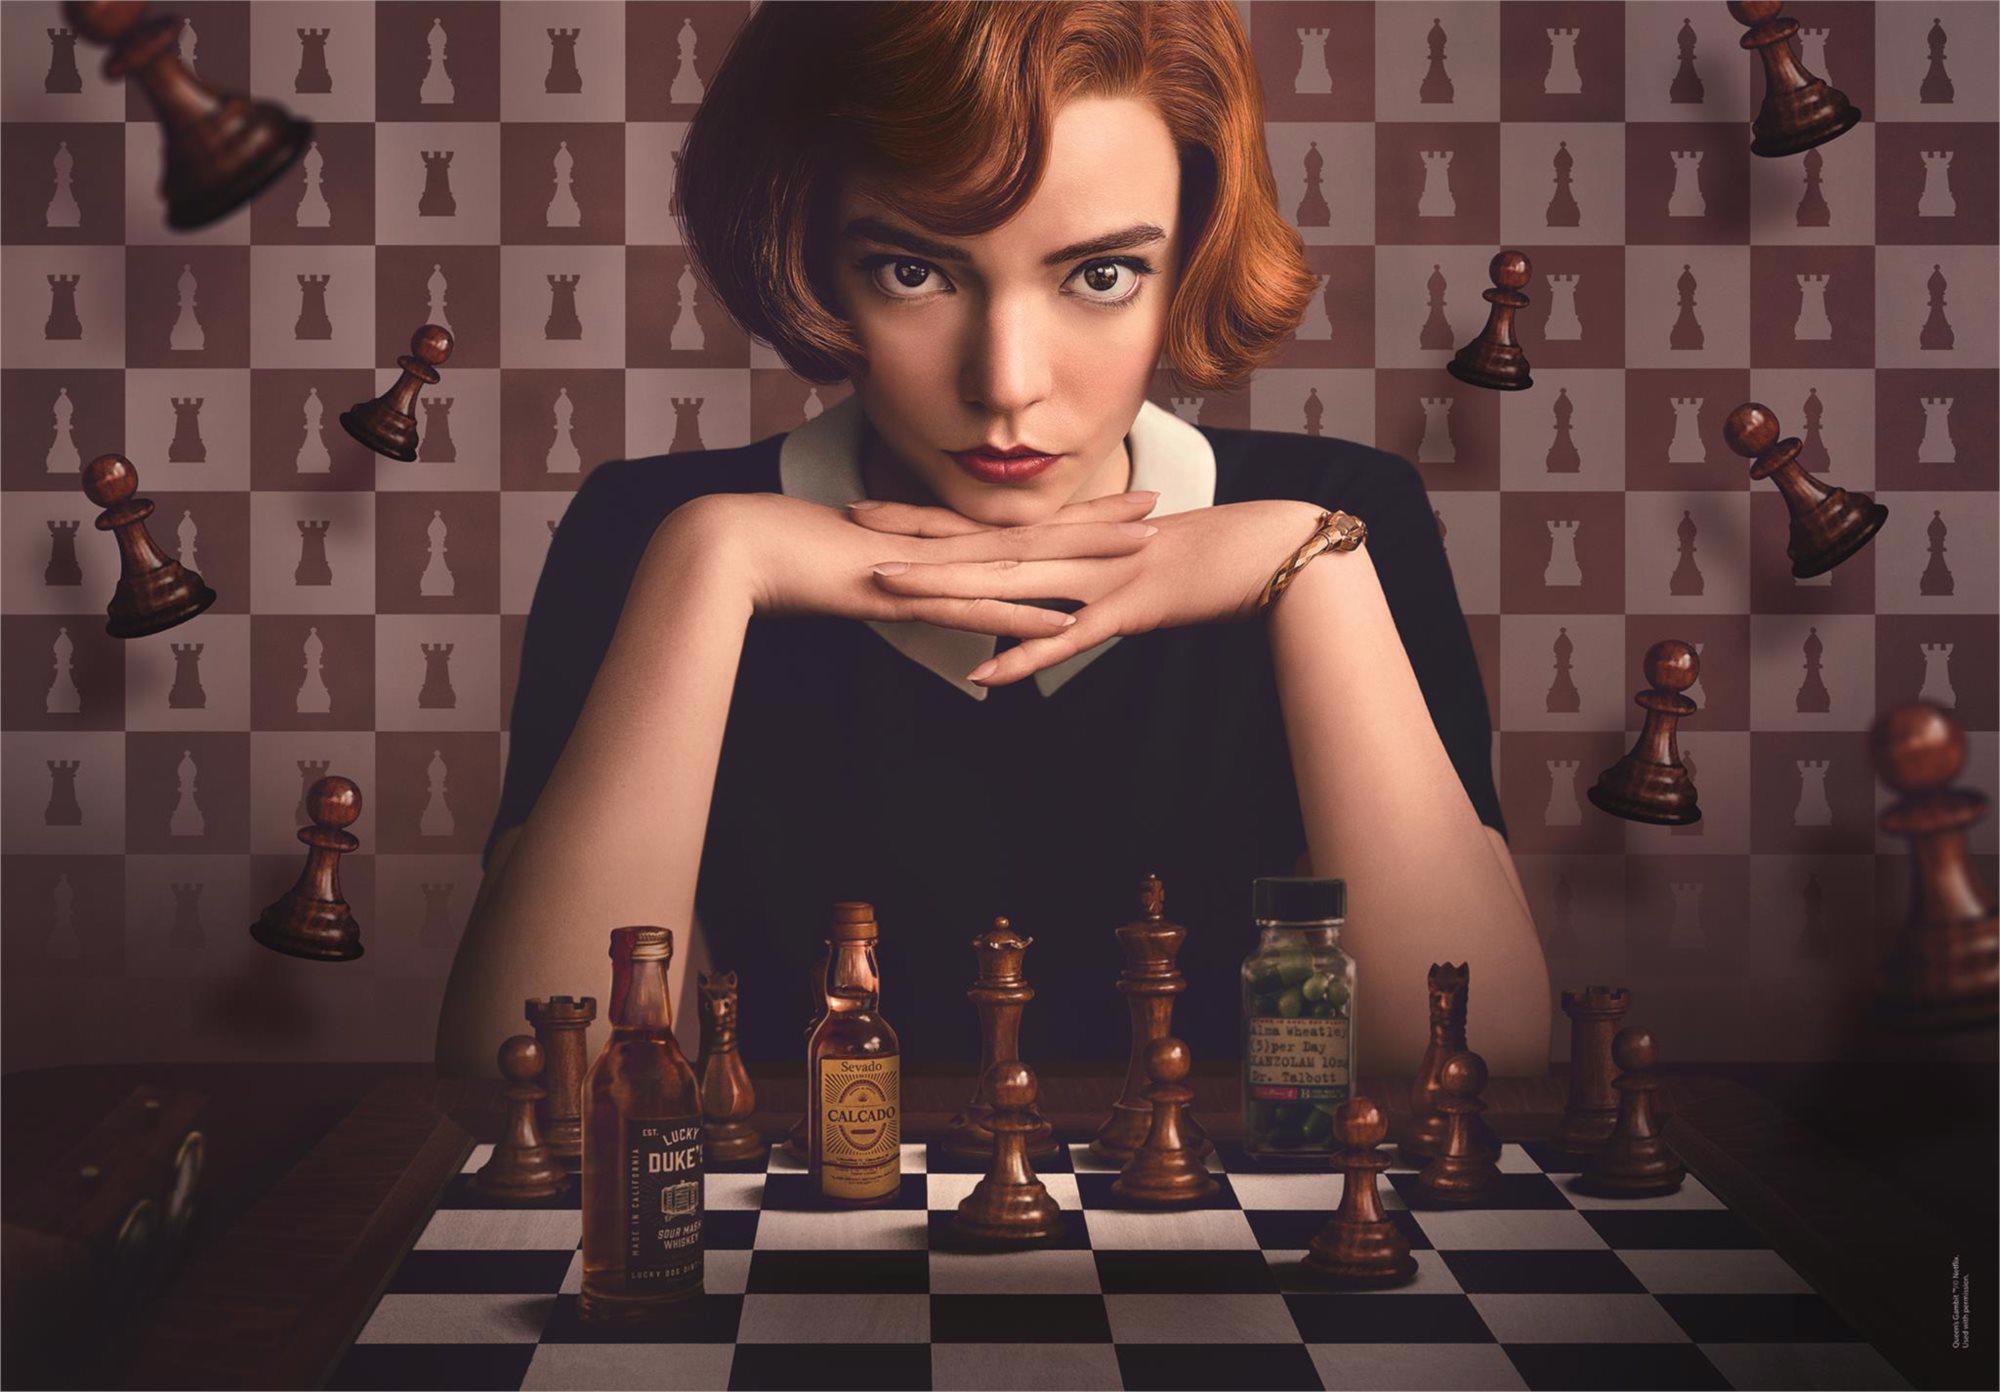 Puzzle Netflix: Ladies' gambit